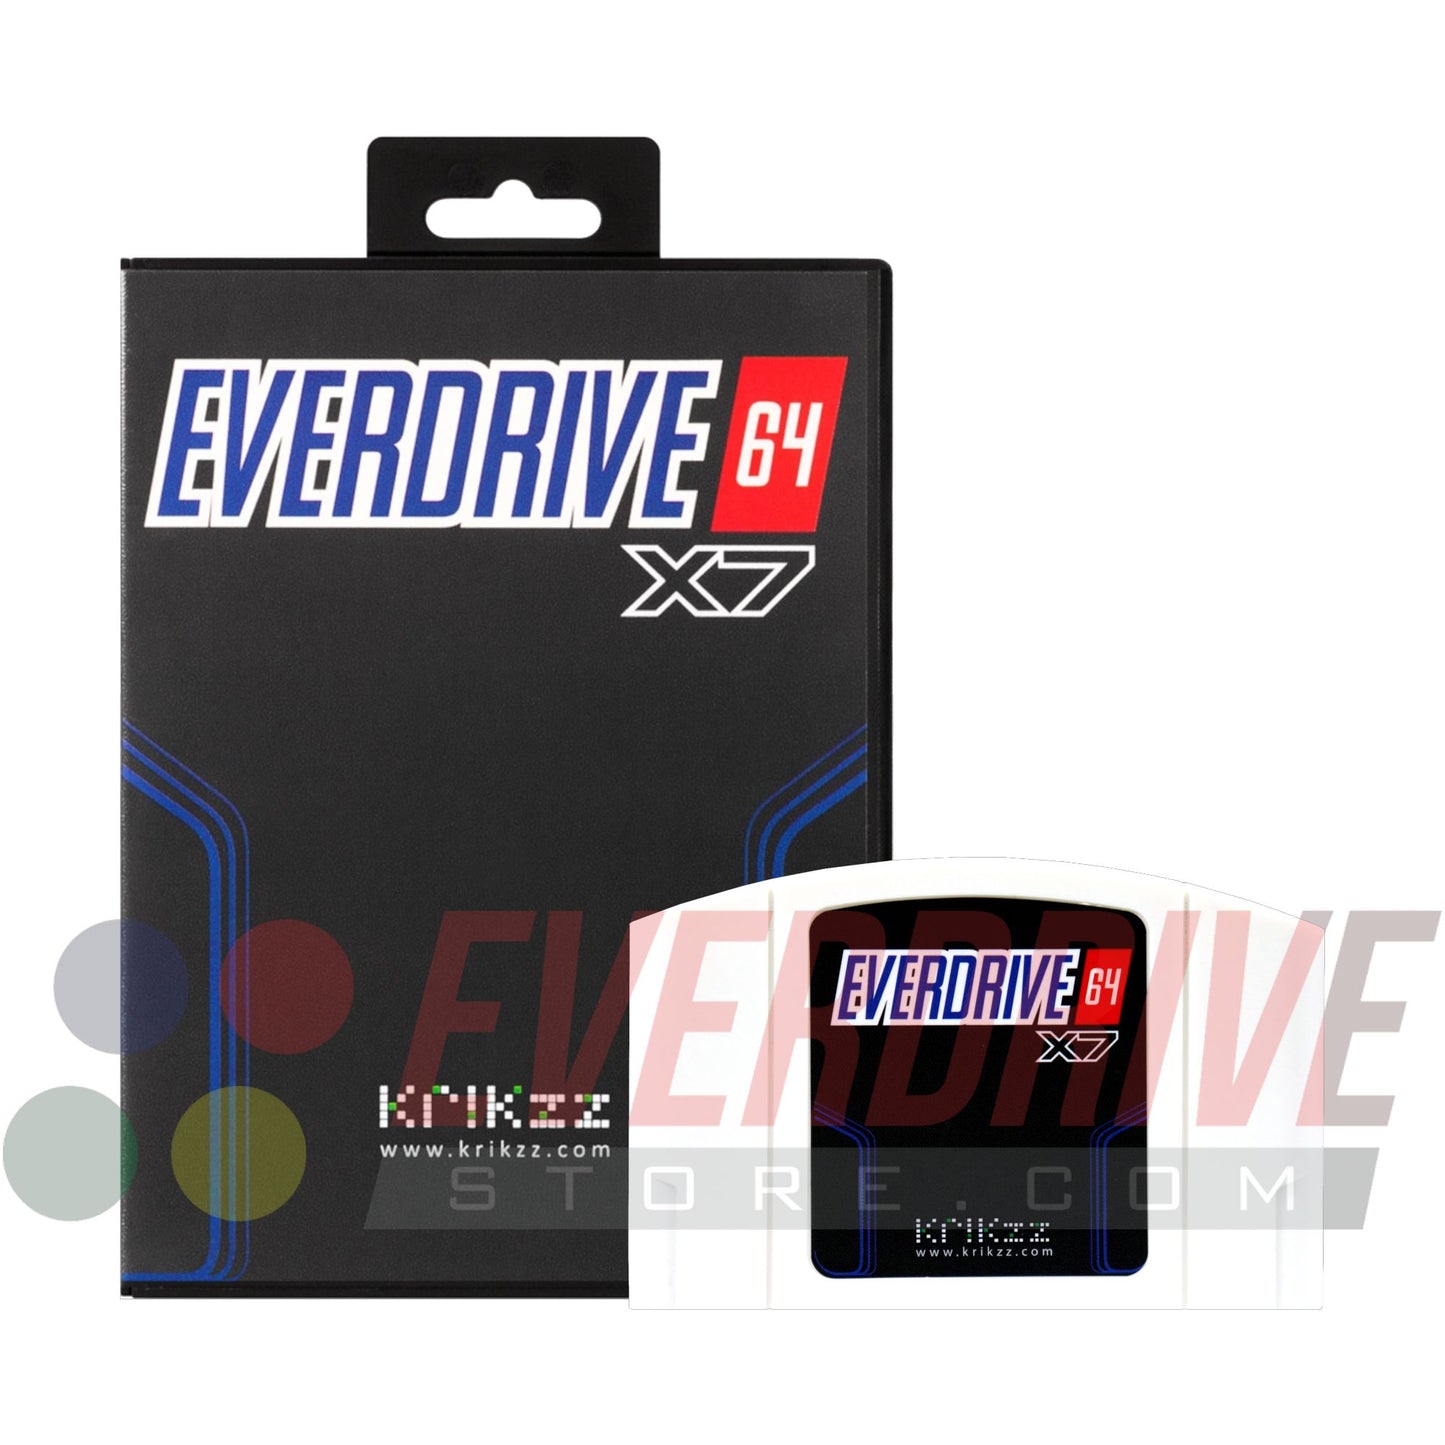 Everdrive 64 X7 - White